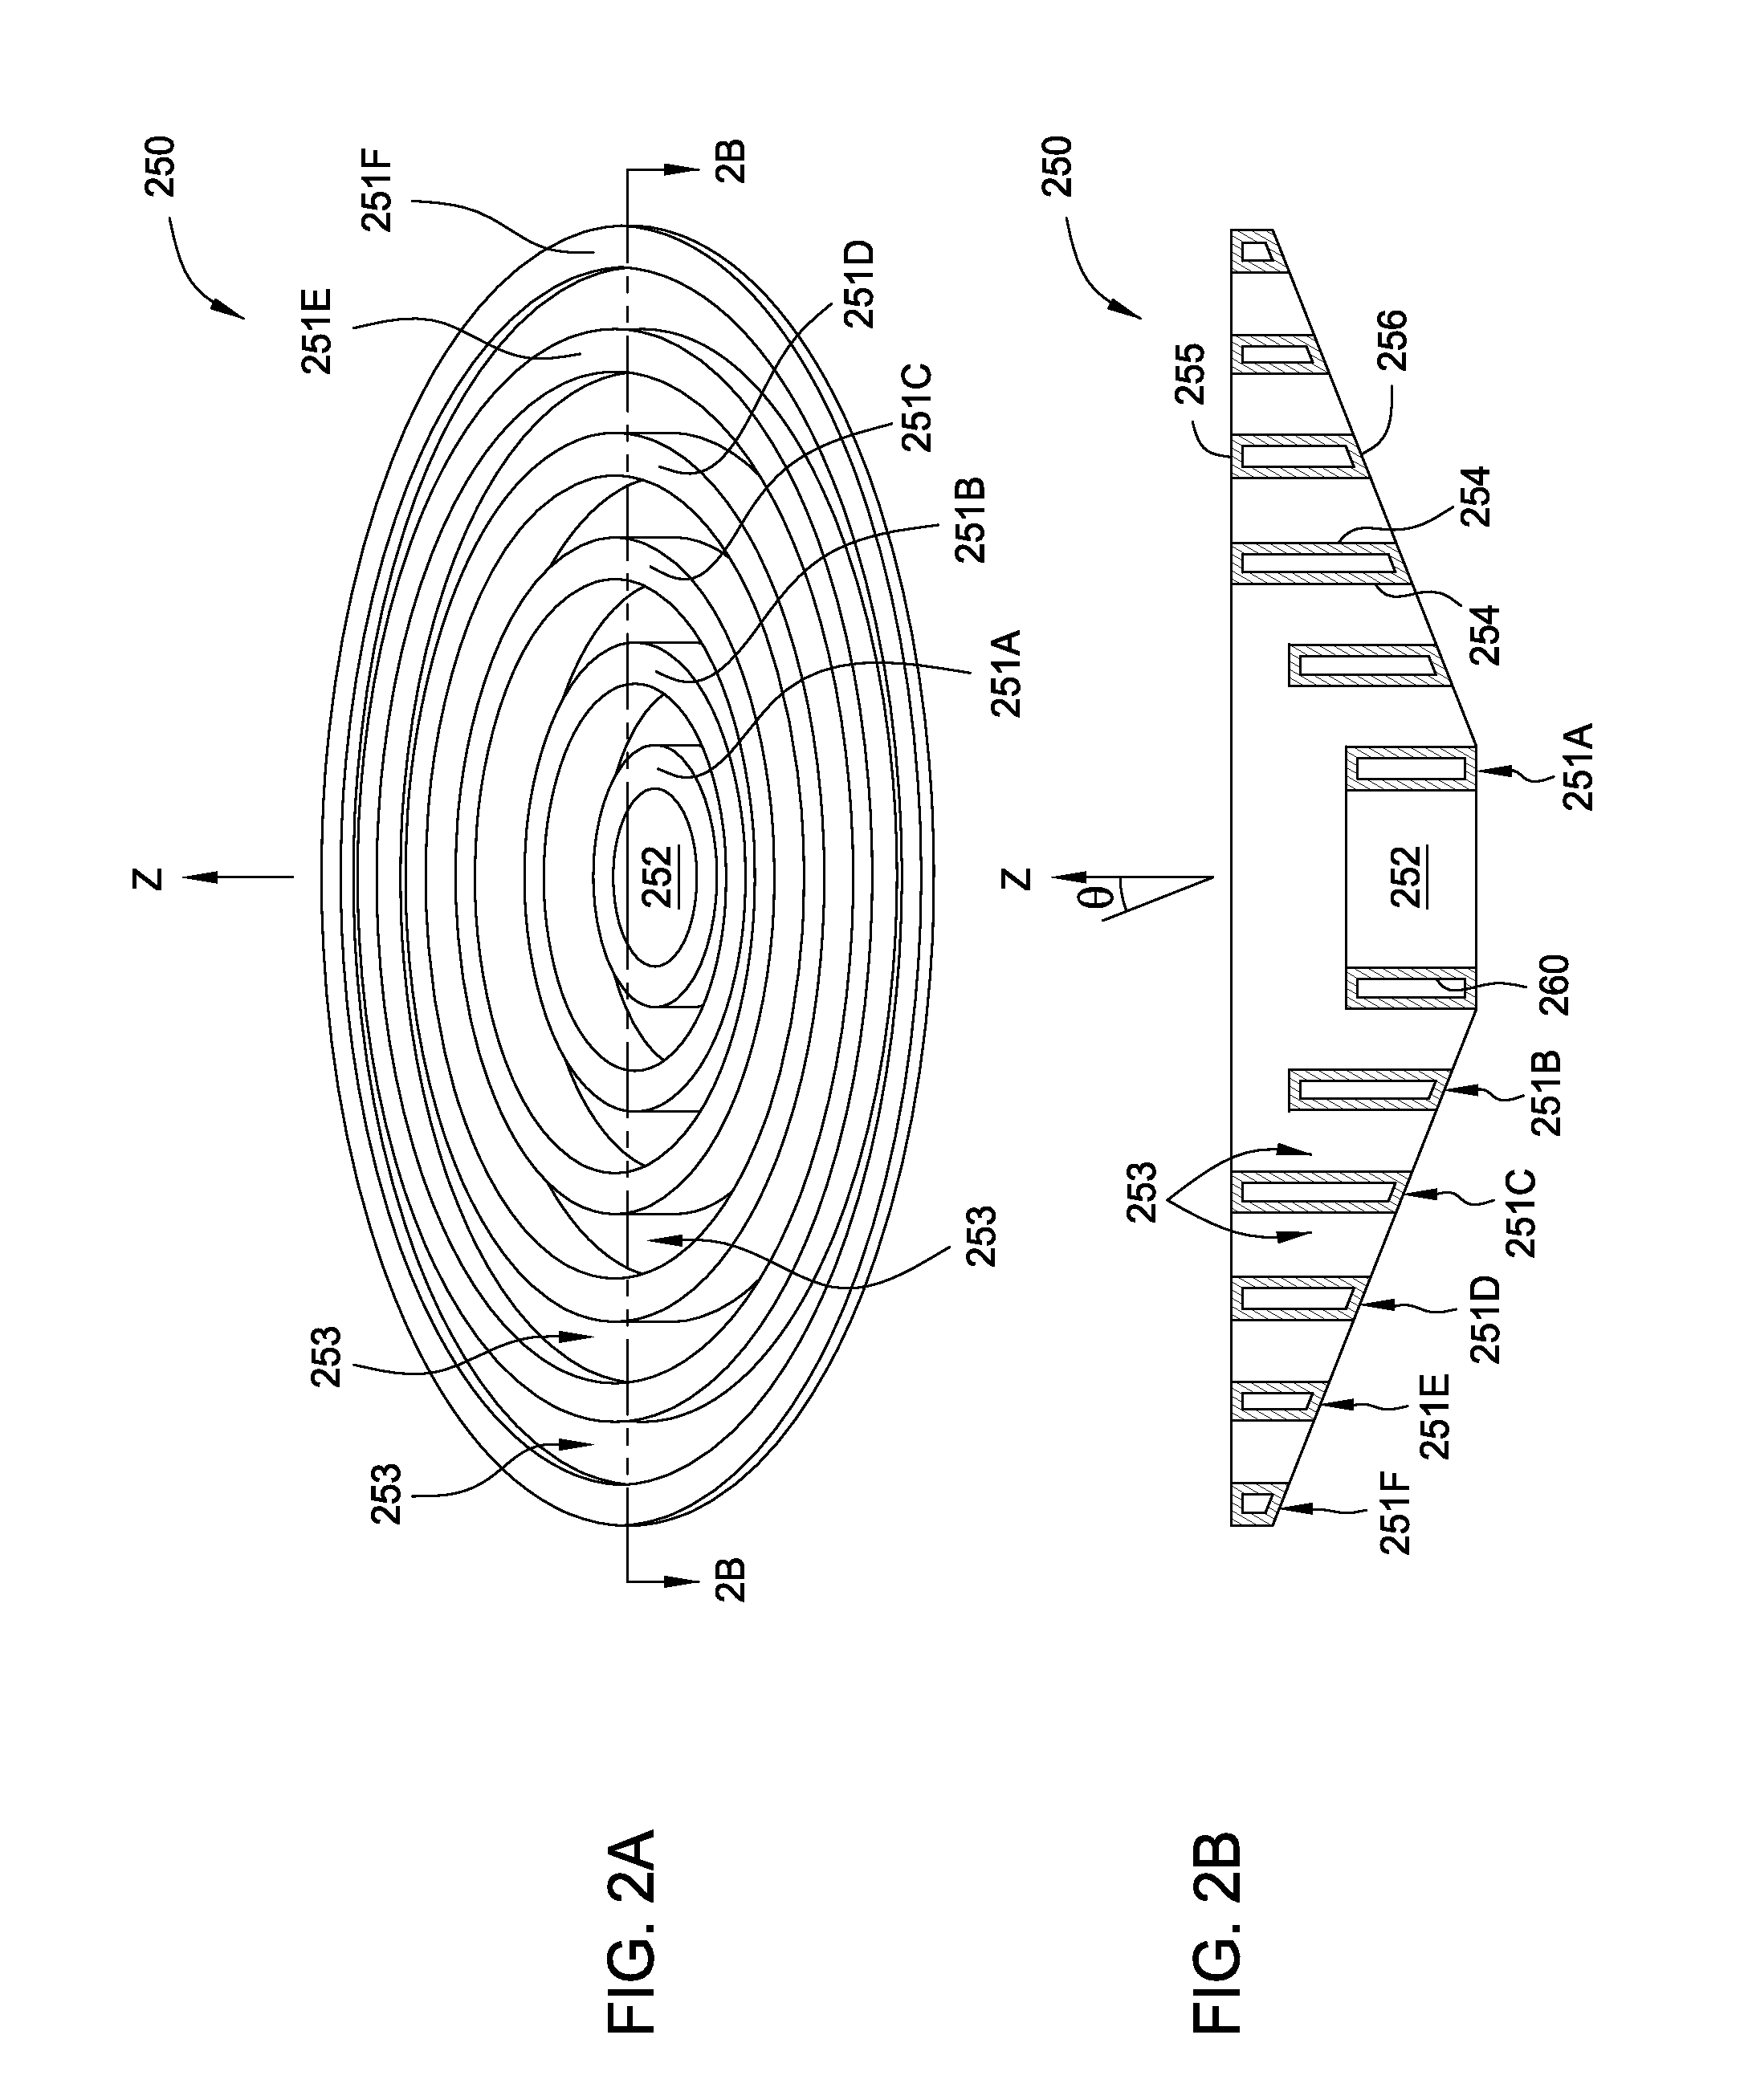 Optics for controlling light transmitted through a conical quartz dome